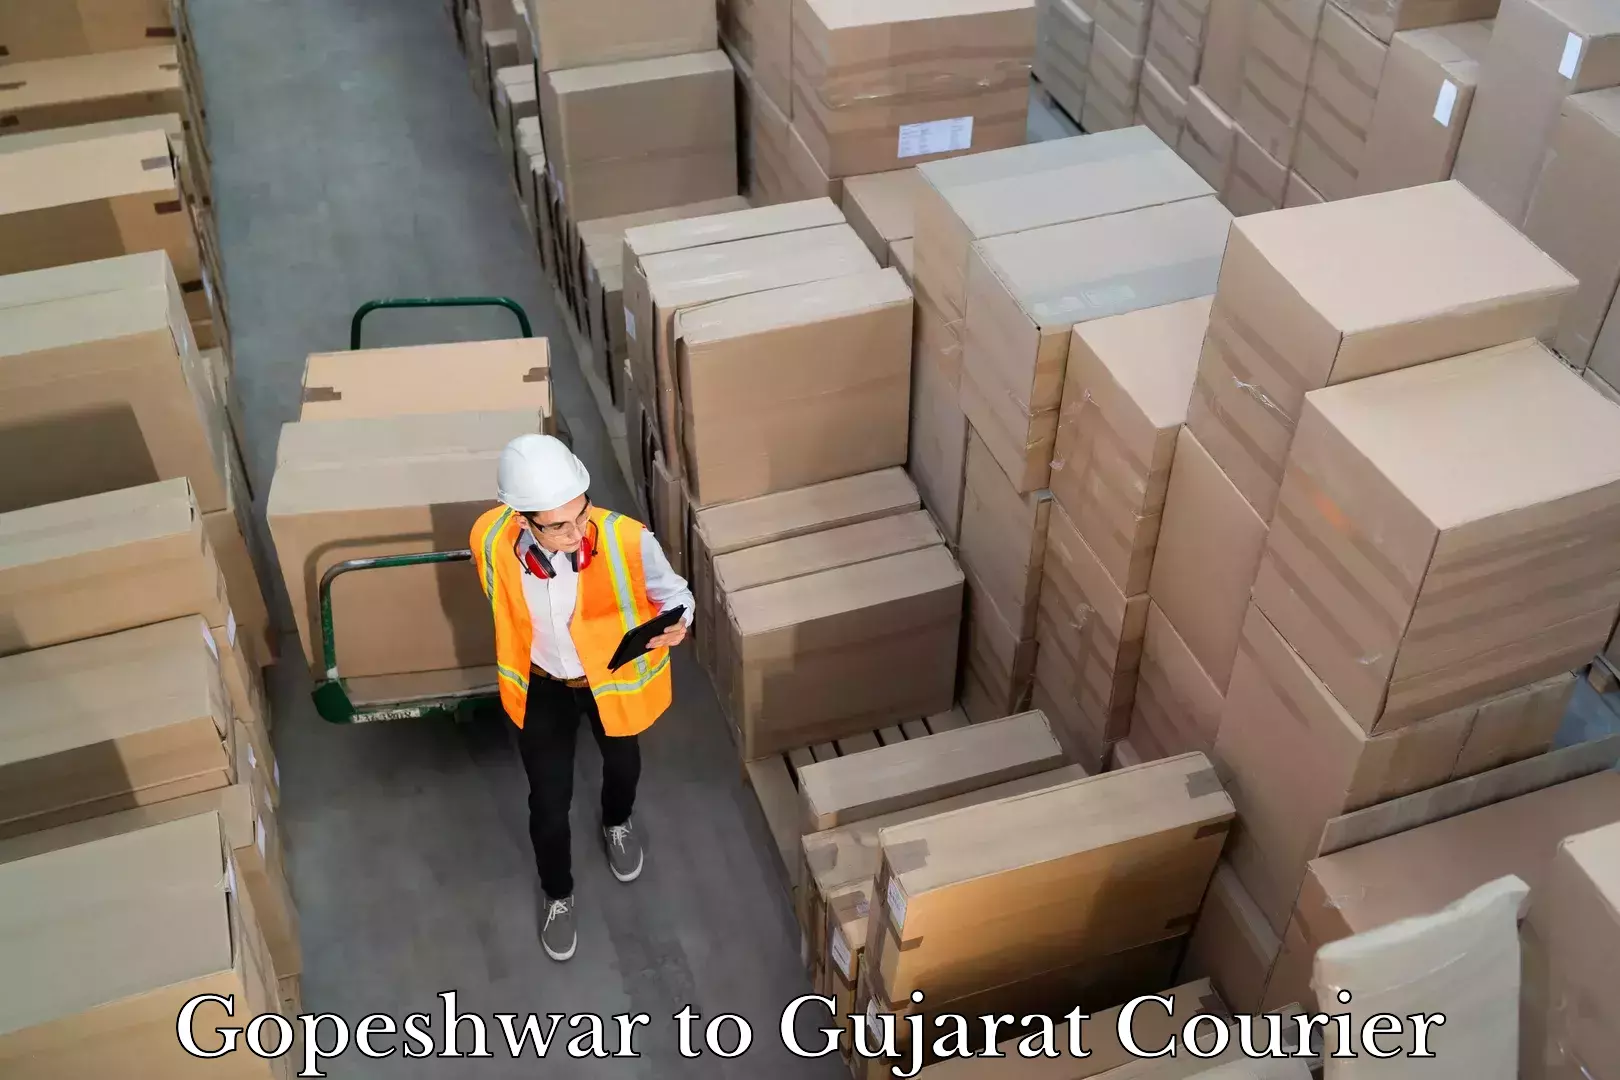 Express delivery network Gopeshwar to Gujarat